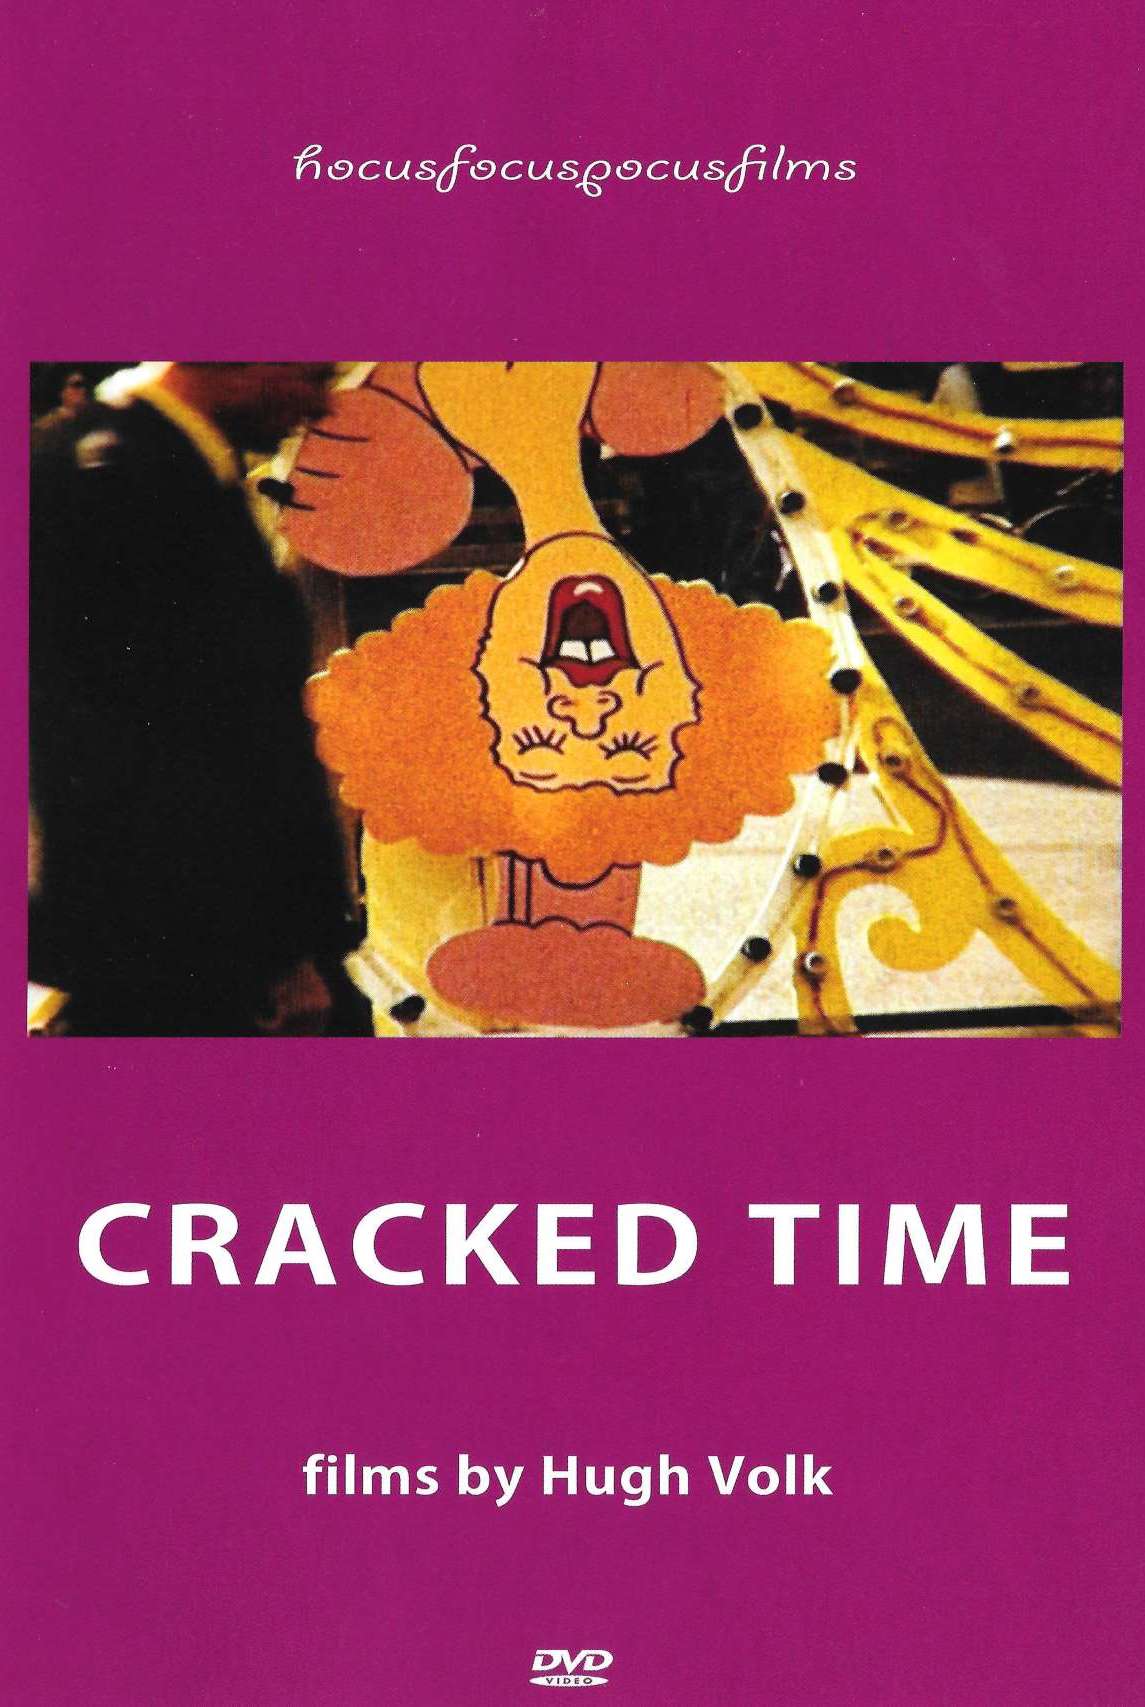 Cracked Time - Films by Hugh Volk